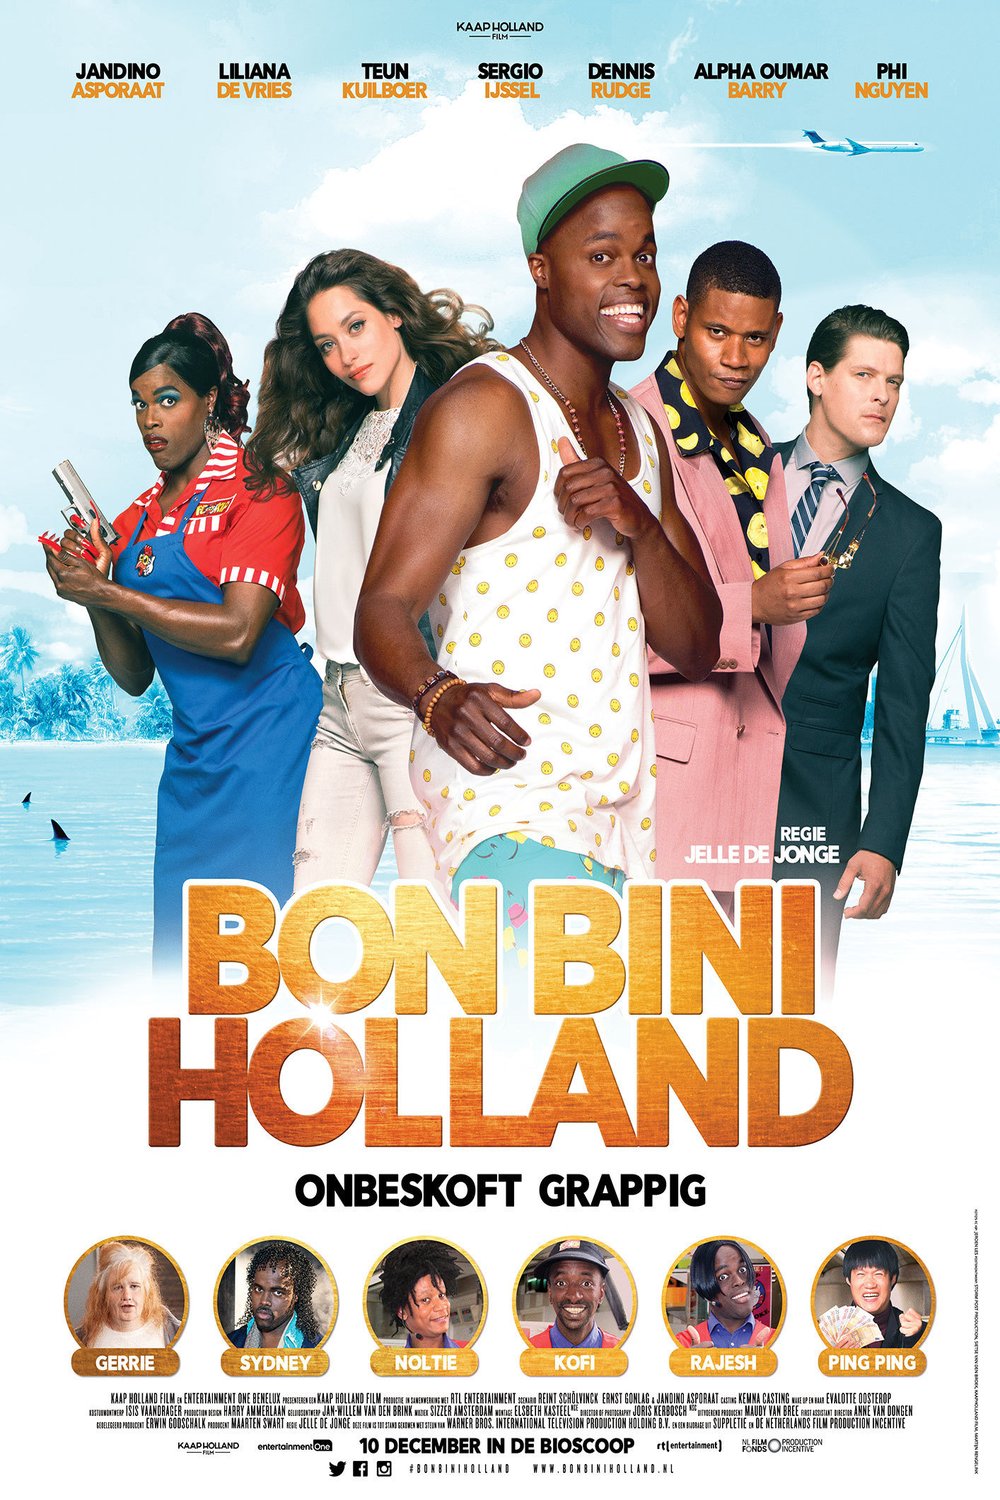 Dutch poster of the movie Bon Bini Holland